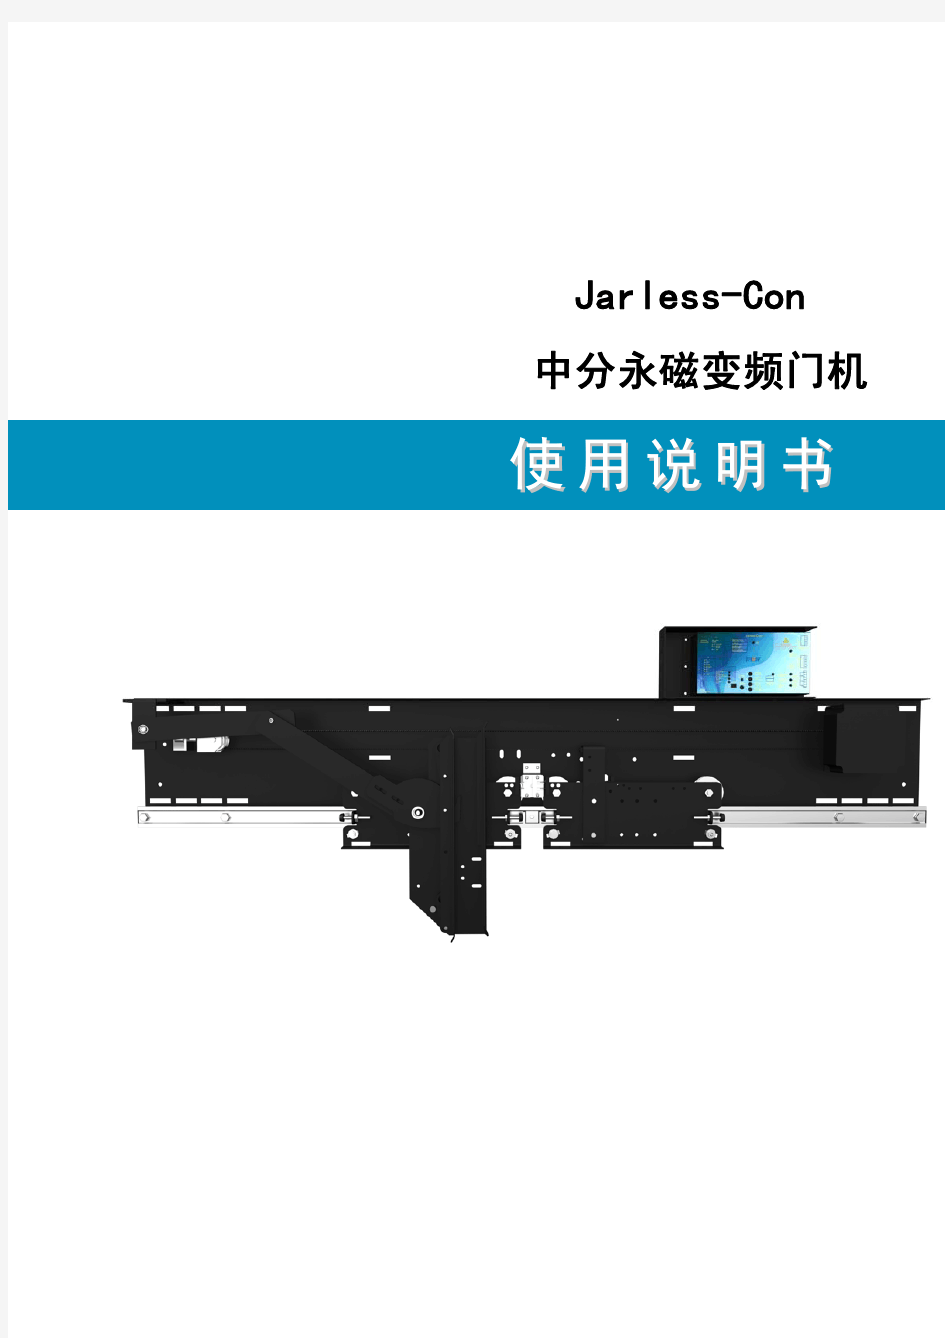 Jarless-Con中分永磁变频门机使用说明书中文版